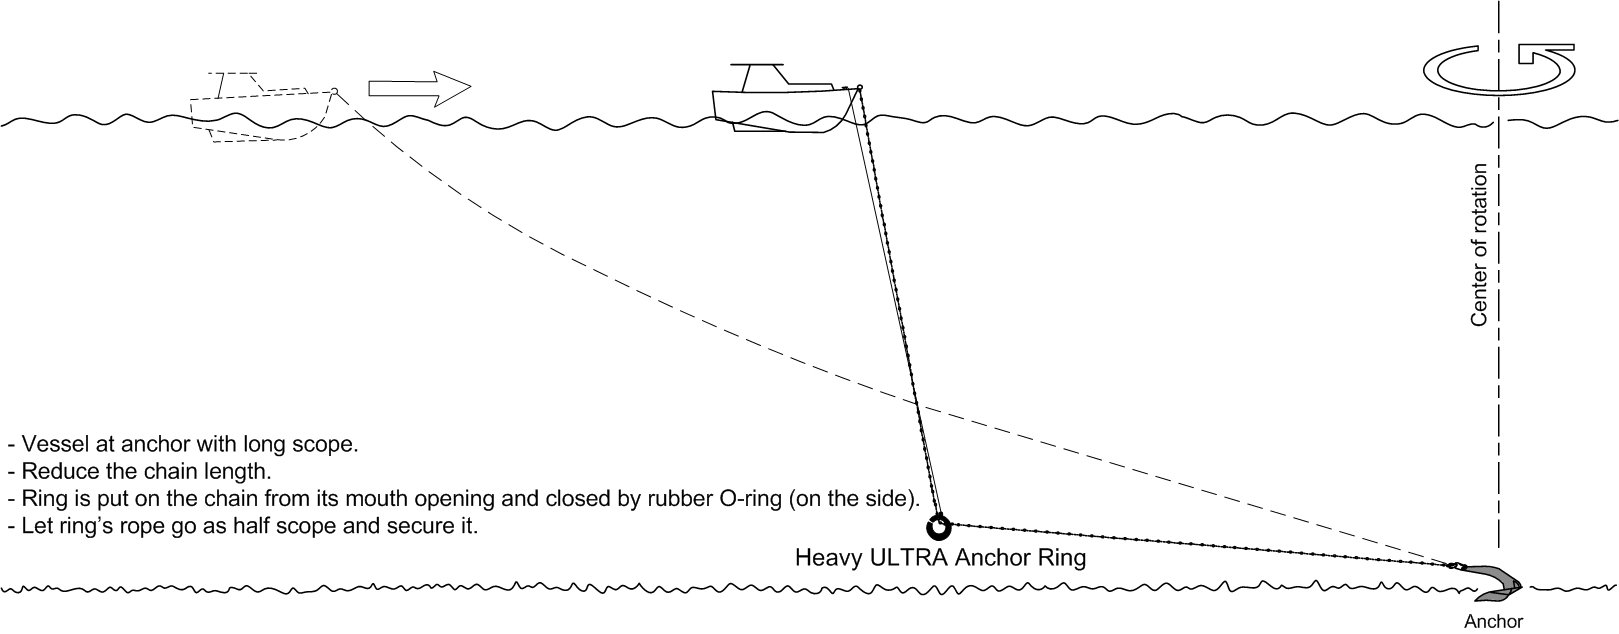 ULTRA_Anchor_Ring_1.jpg